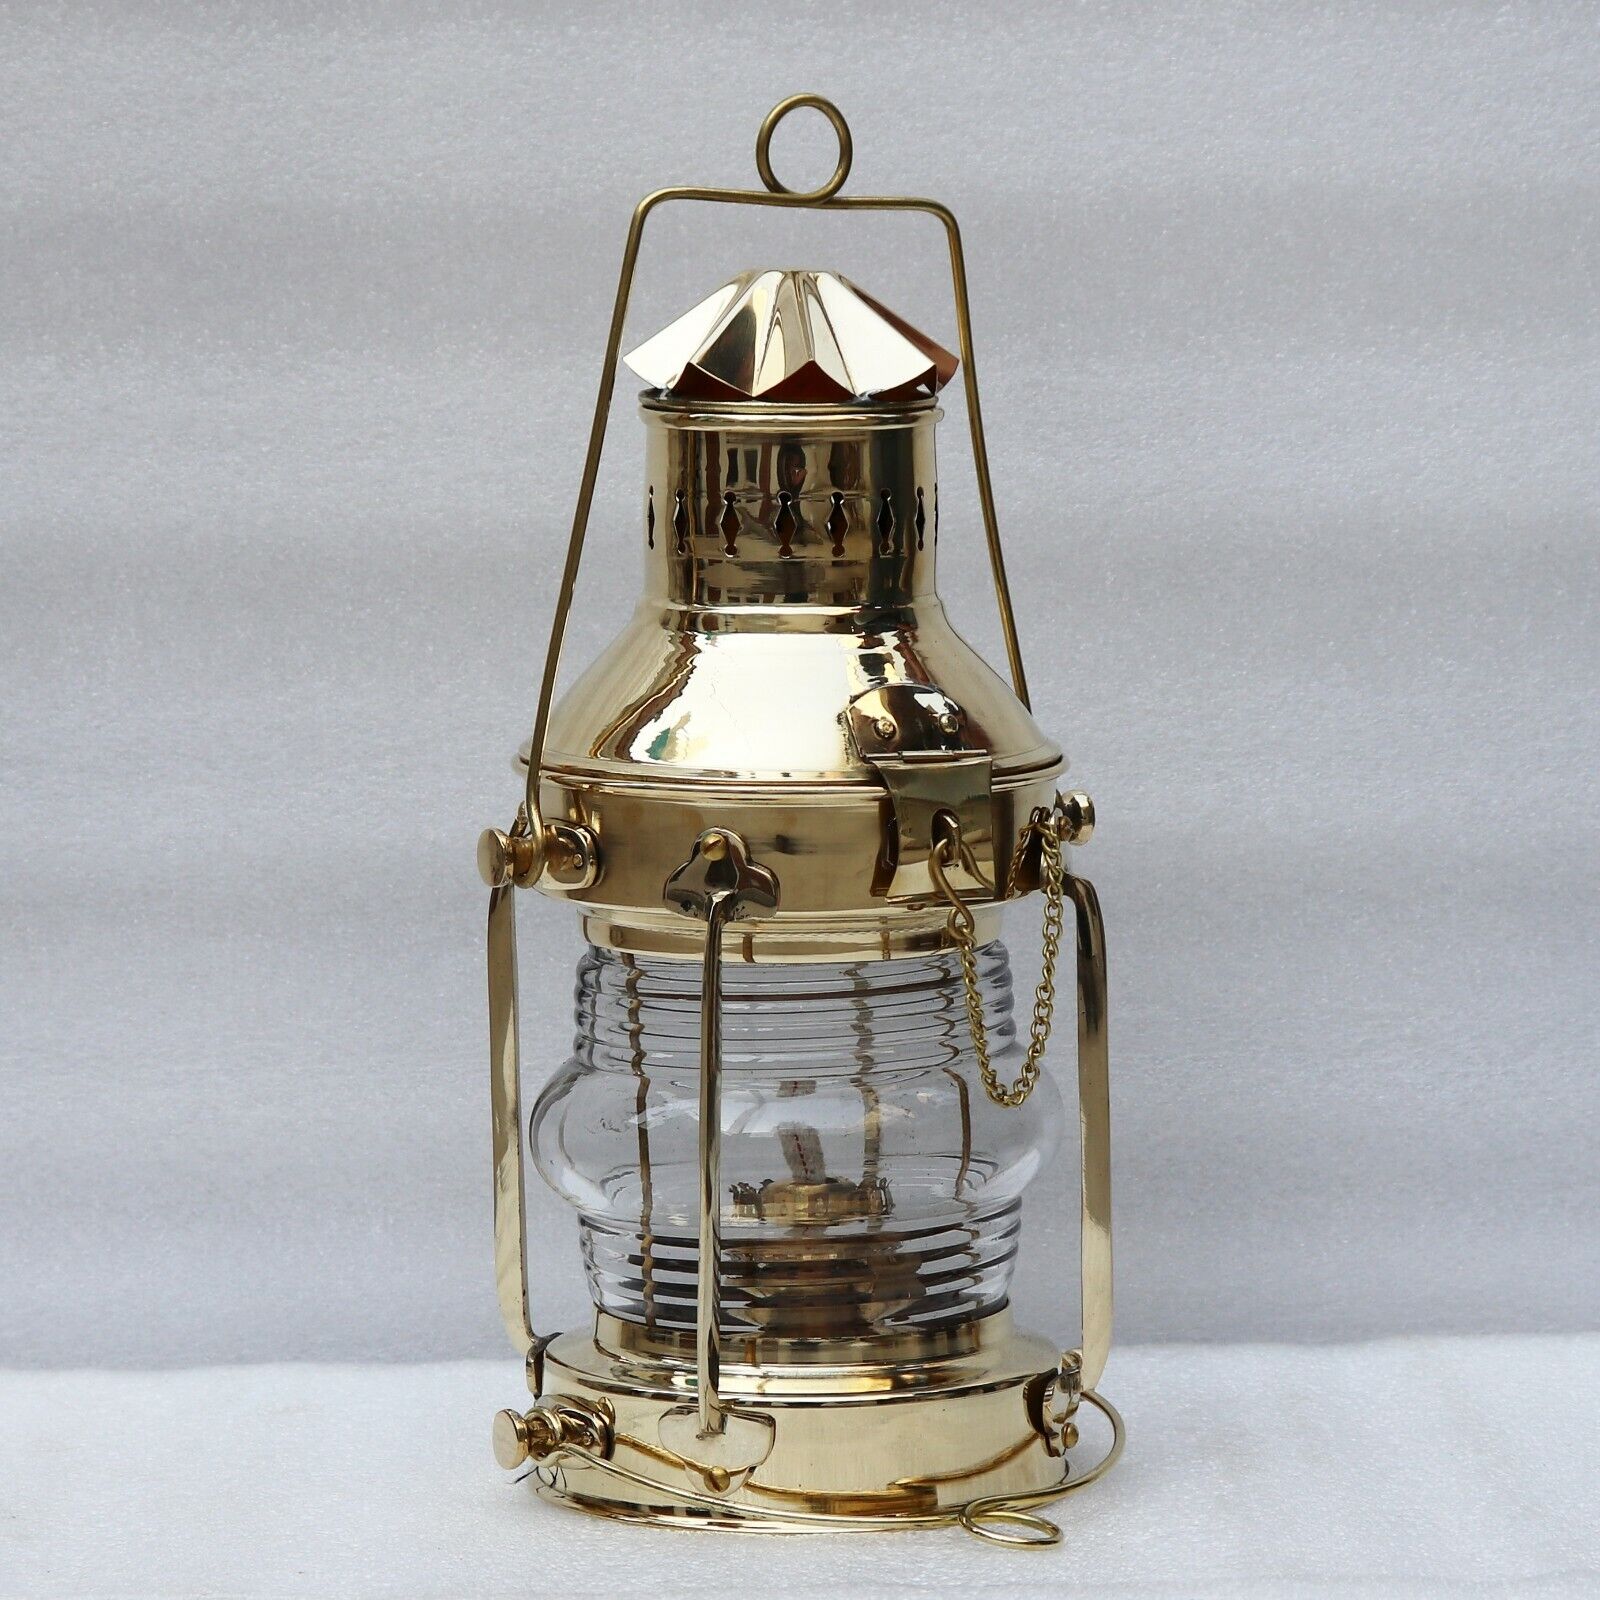 Antique Brass Ship Oil Lantern Hanging Lamp Collectible Decor Item